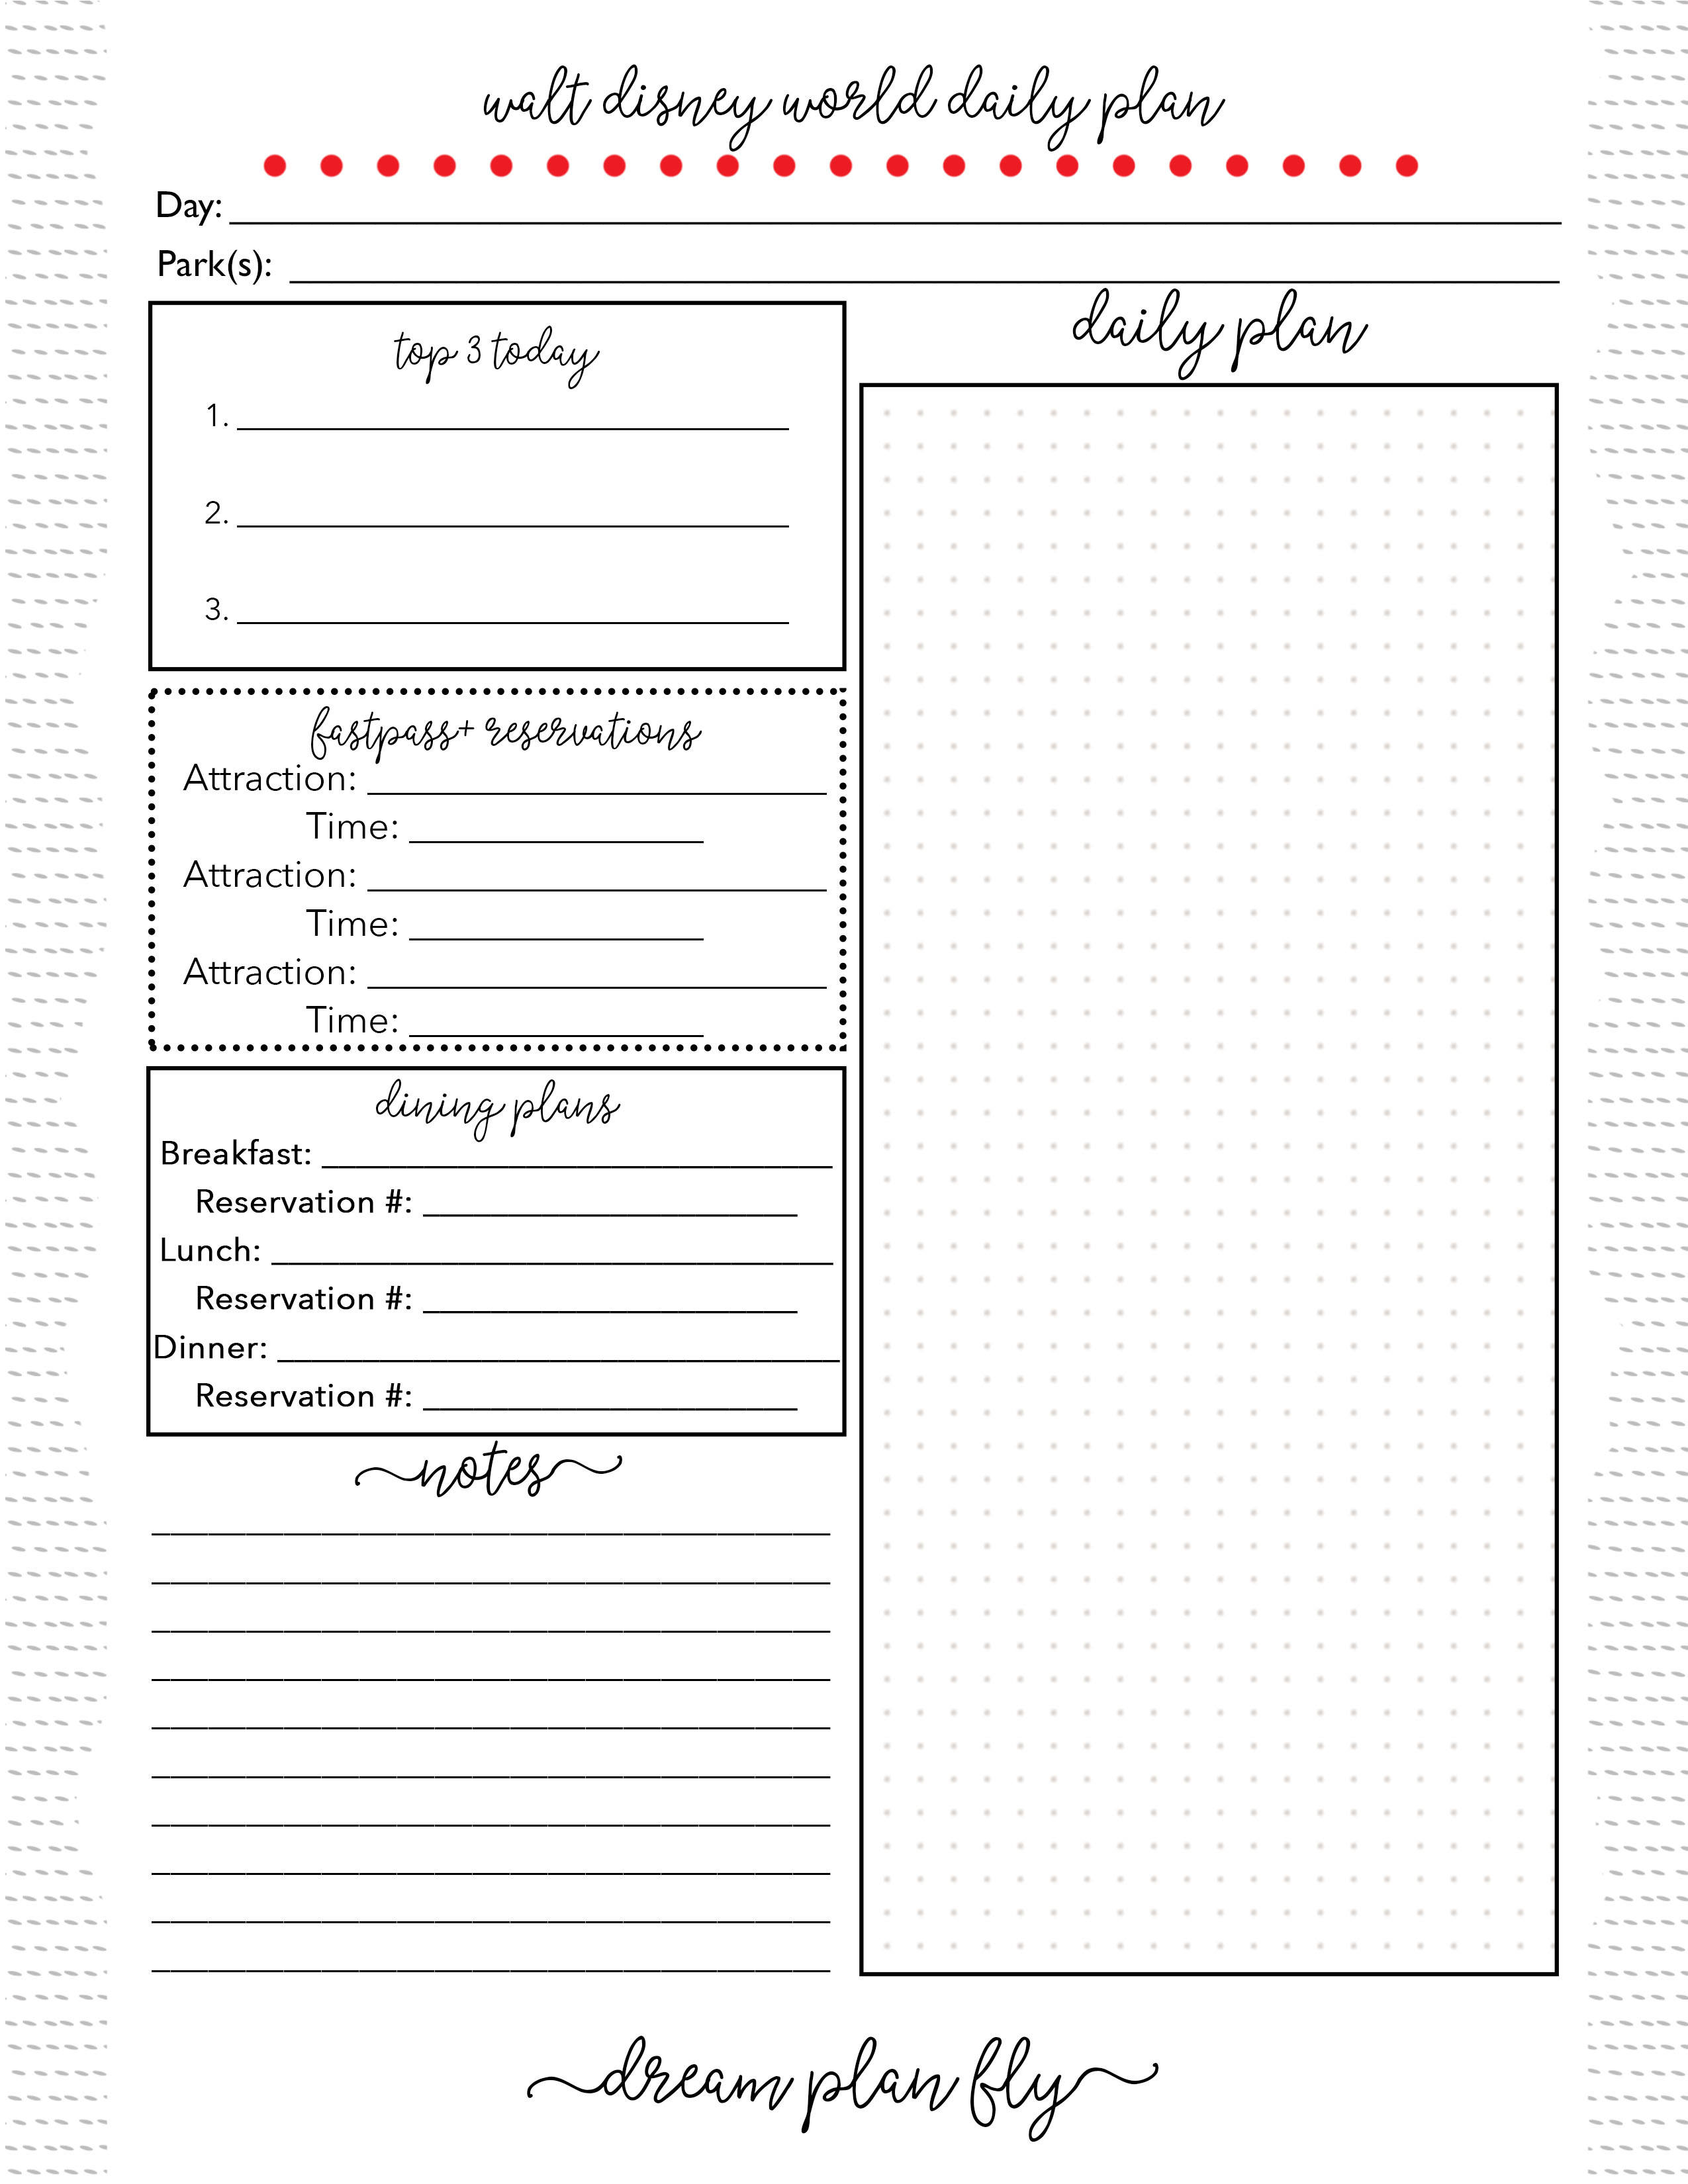 free-printable-daily-planner-for-walt-disney-world-dream-plan-fly